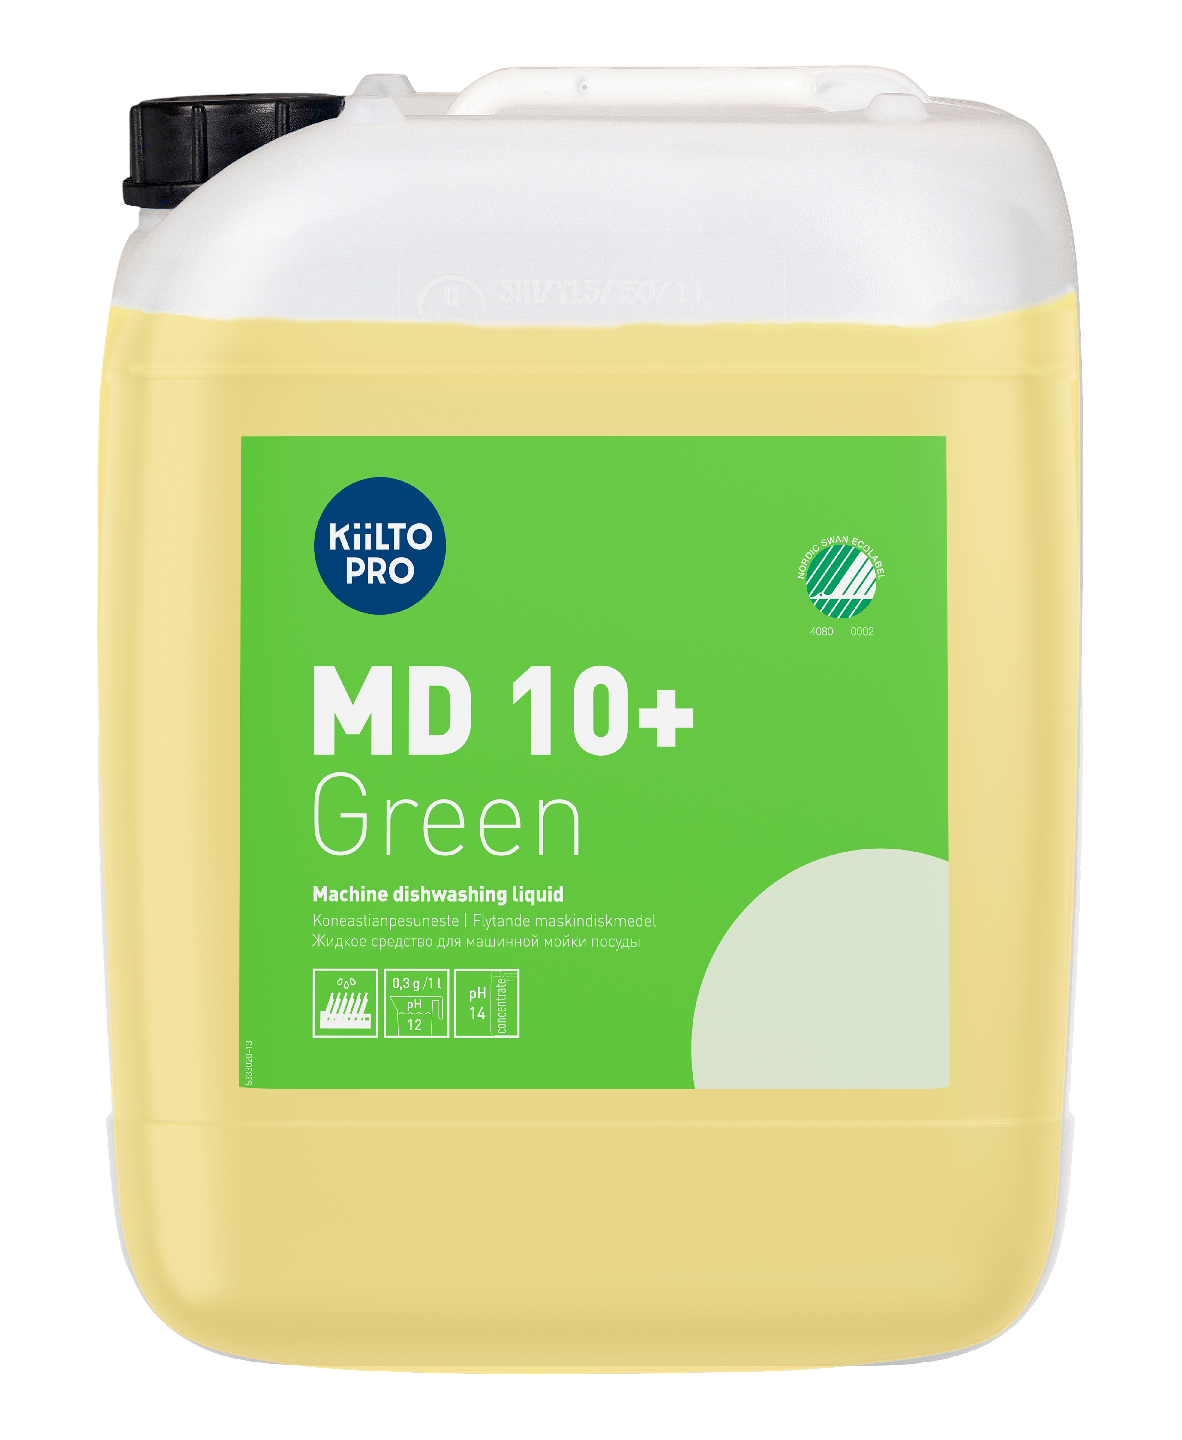 Kiilto MD 10+ Green 20l koneastianpesuaine